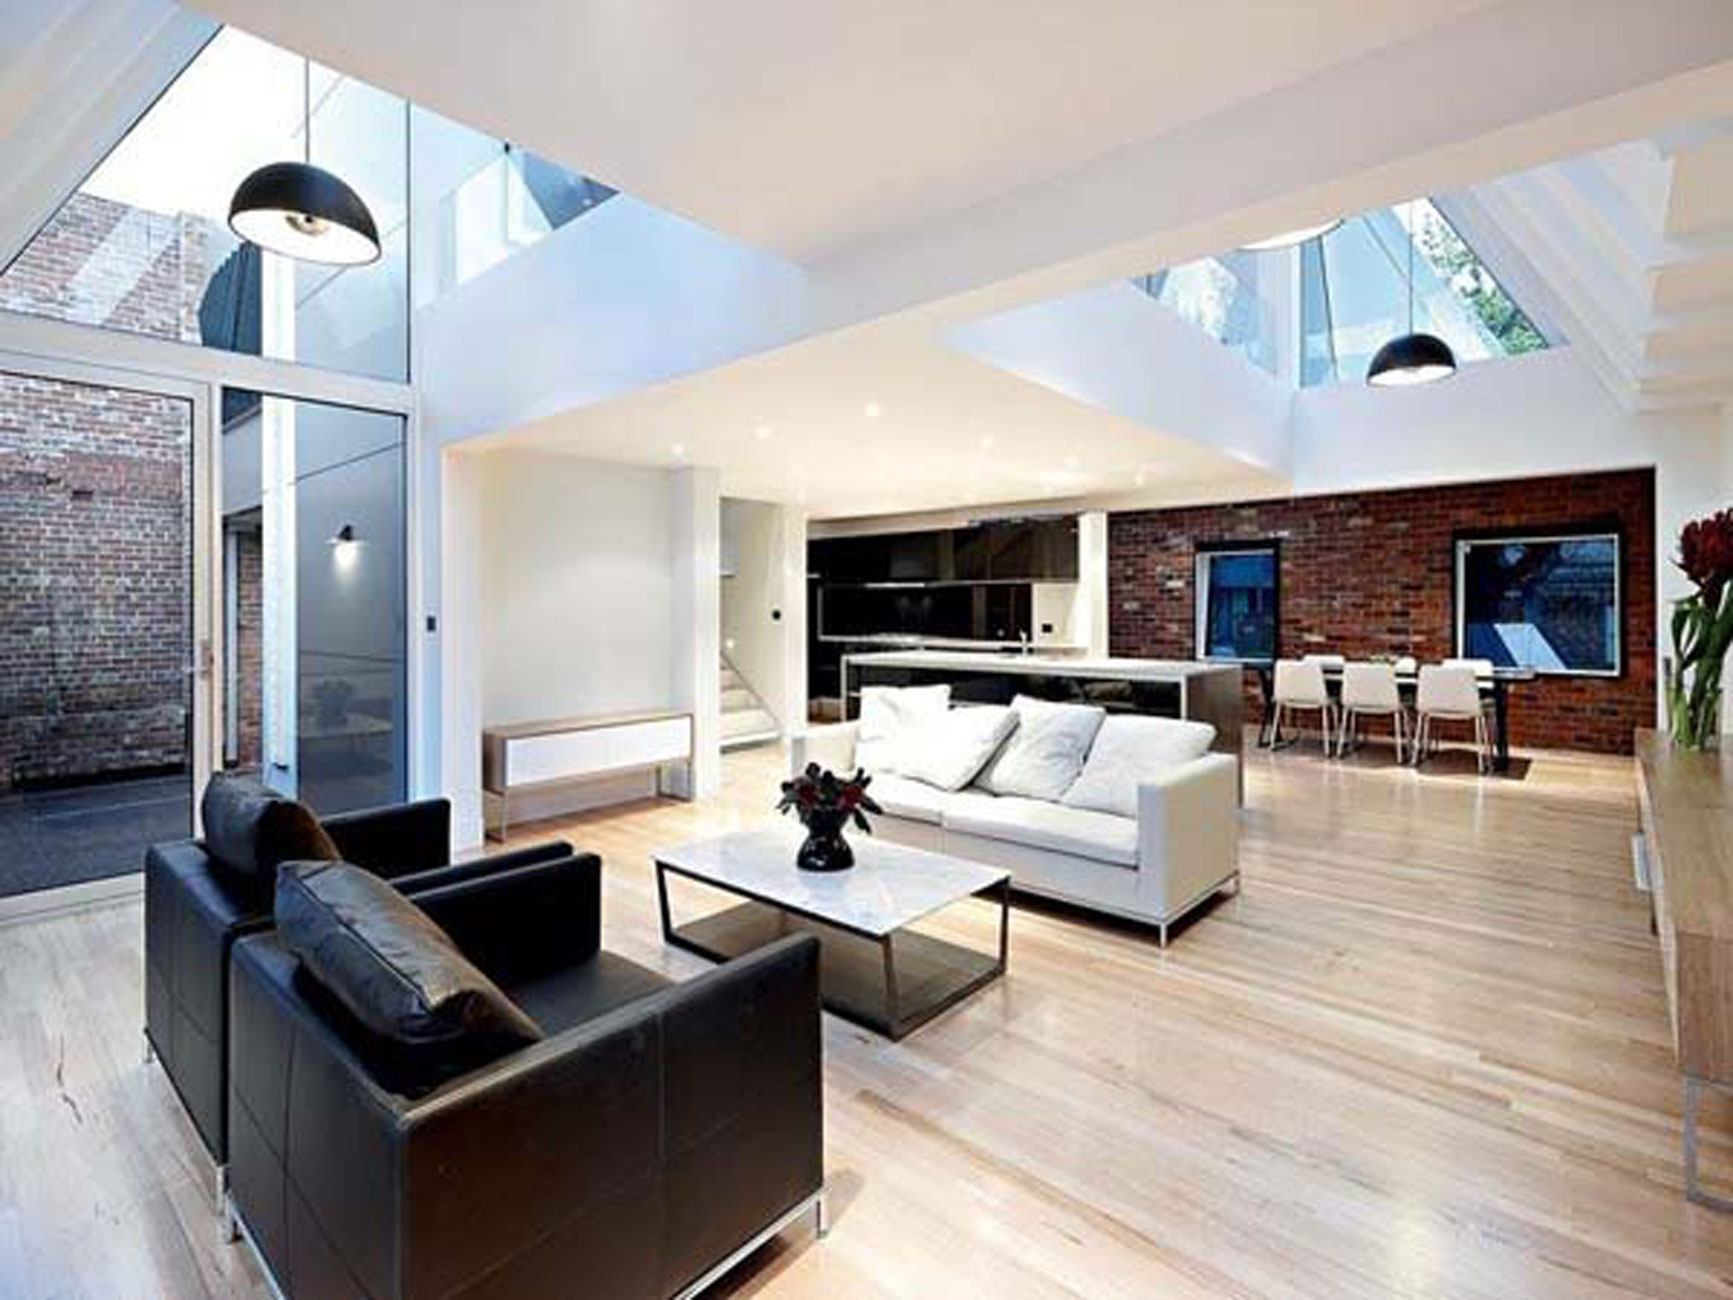 25 Effective Modern Interior Design Ideas The WoW Style